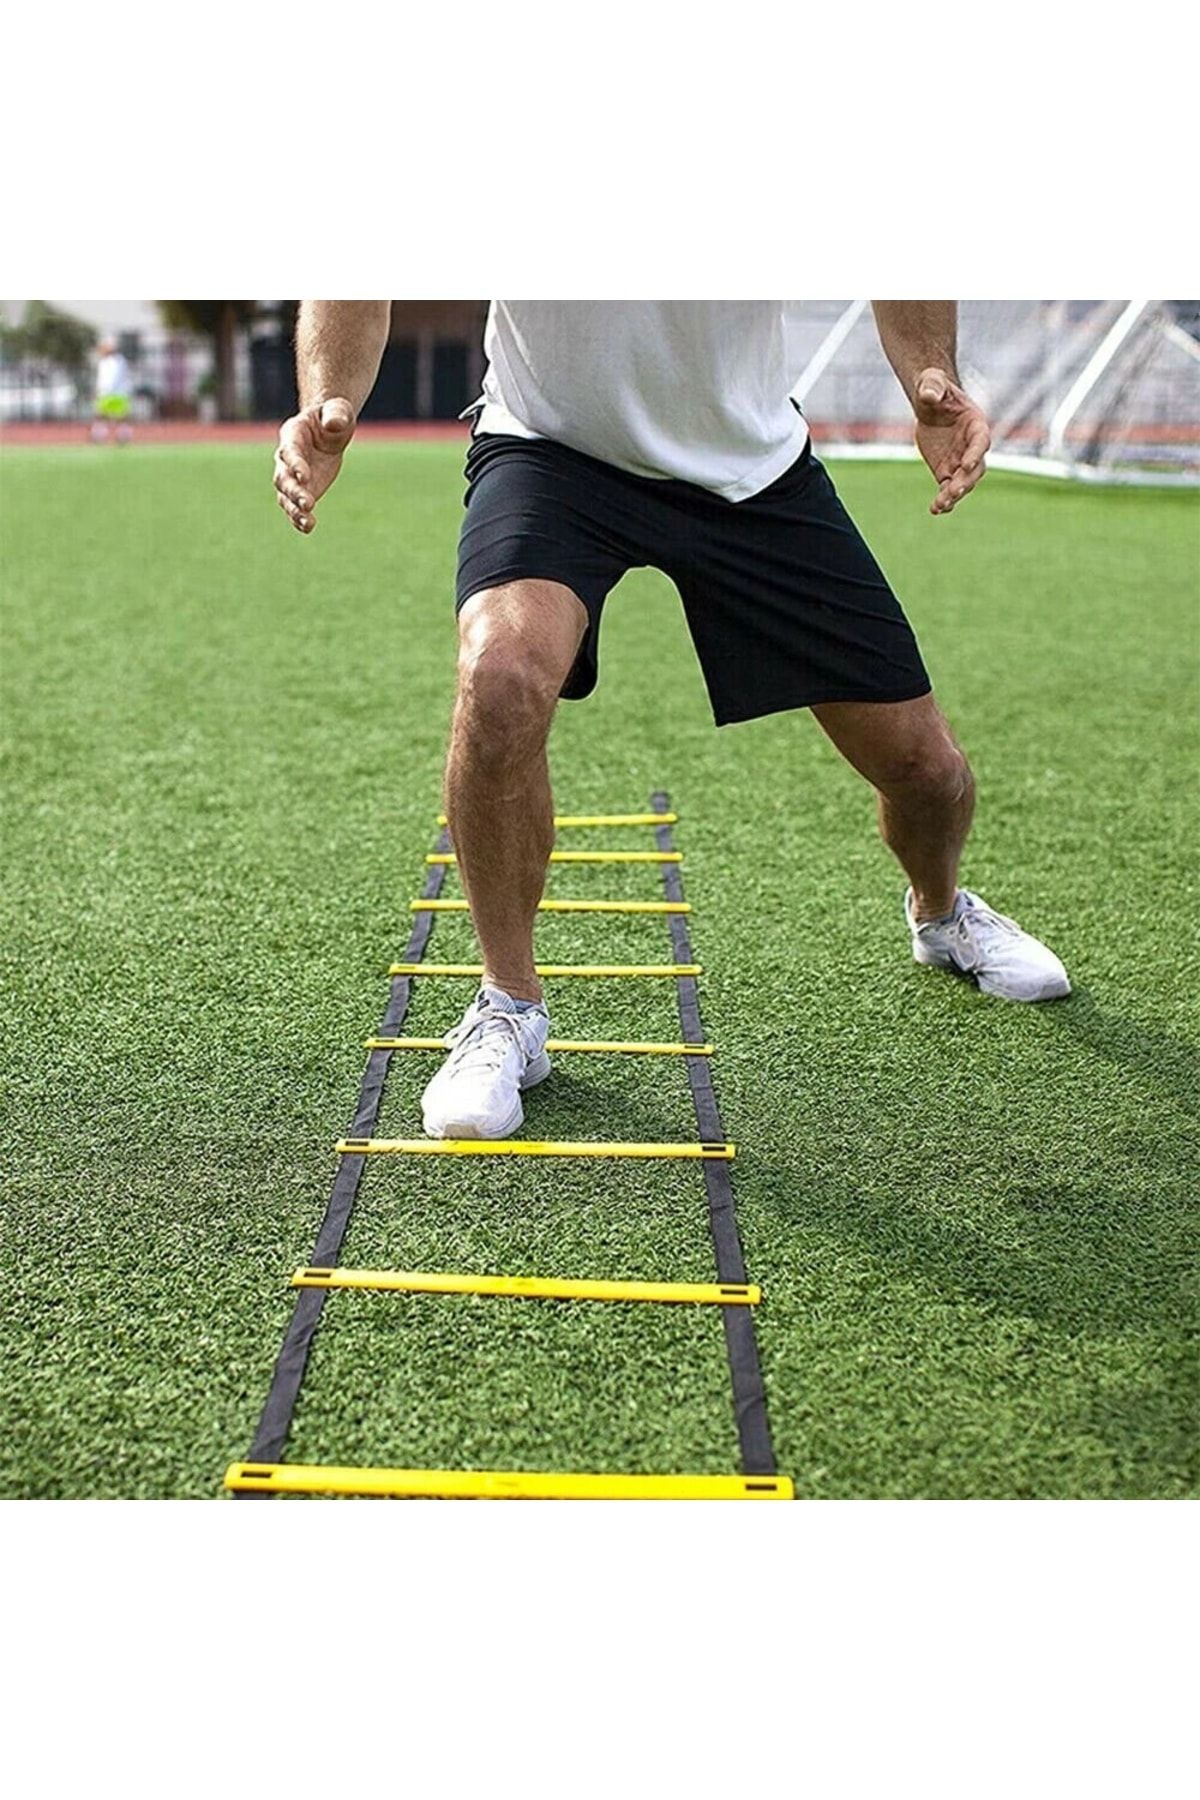 Aqua Beads Futbol Antrenman Merdiveni 10 Adet Basamak Ayarlanabilir 4 Metre Uzunluk Çantalı